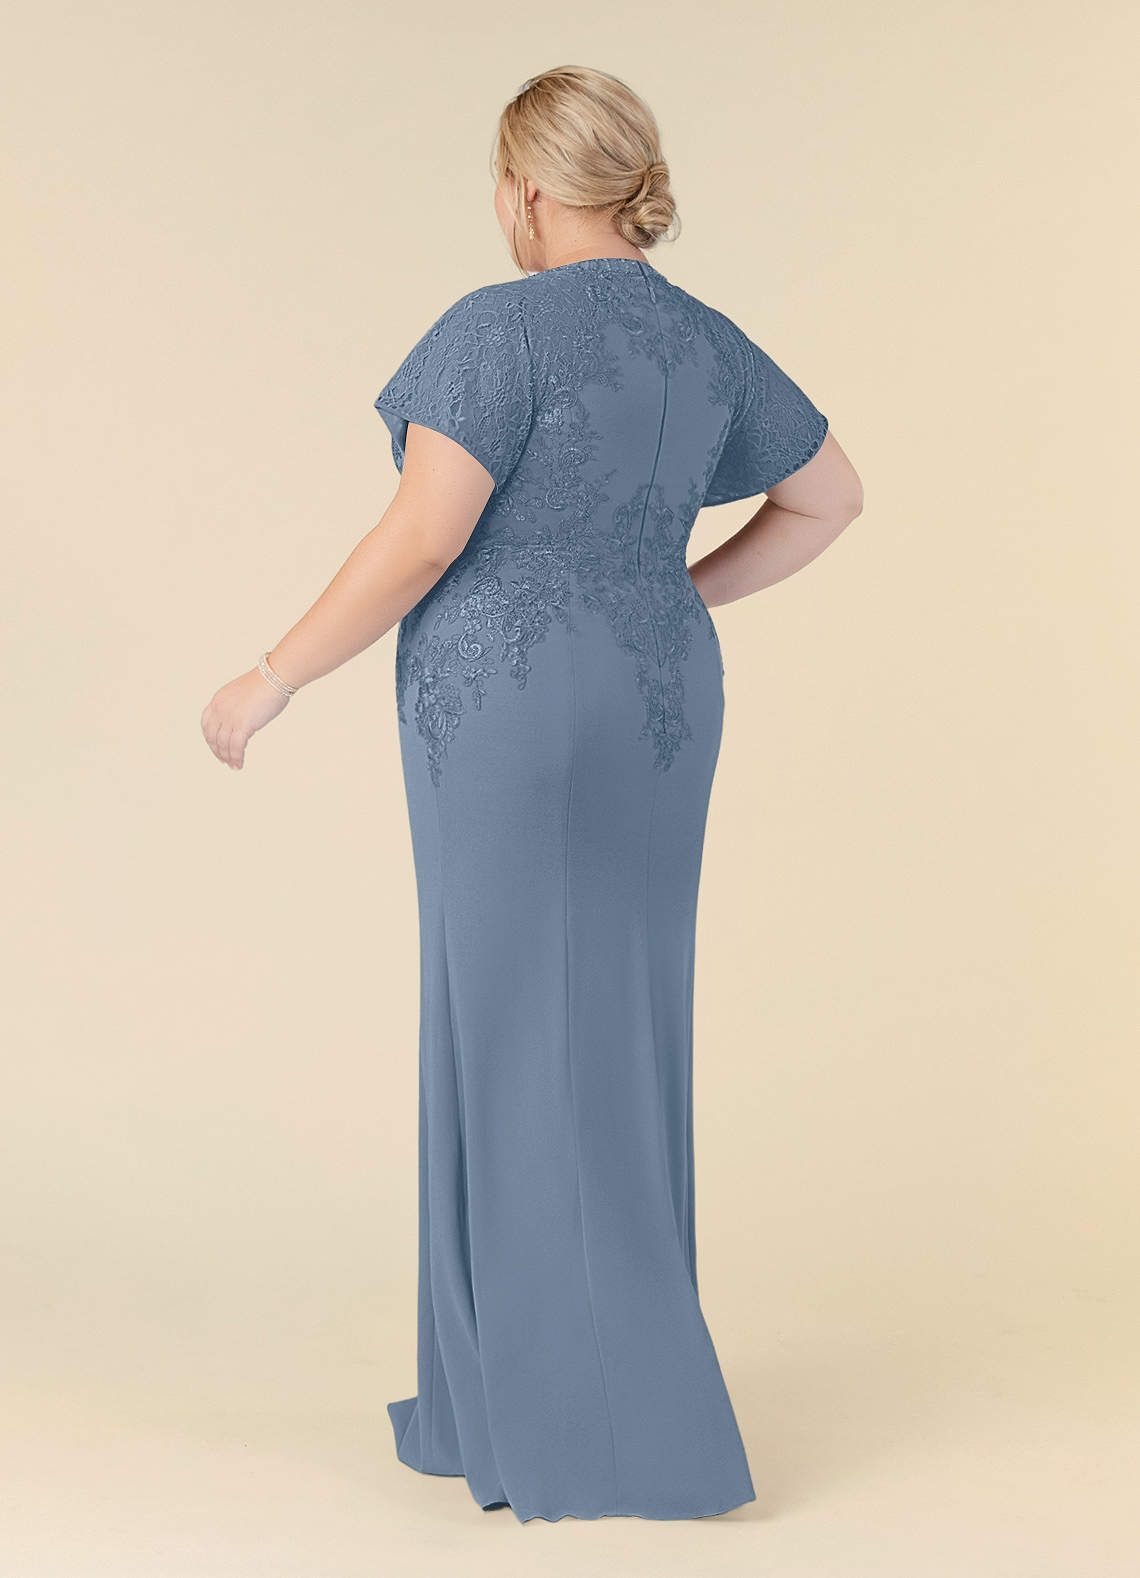 Azazie Adonna Mother of the Bride Dresses Mermaid Lace Floor-Length Dress image1